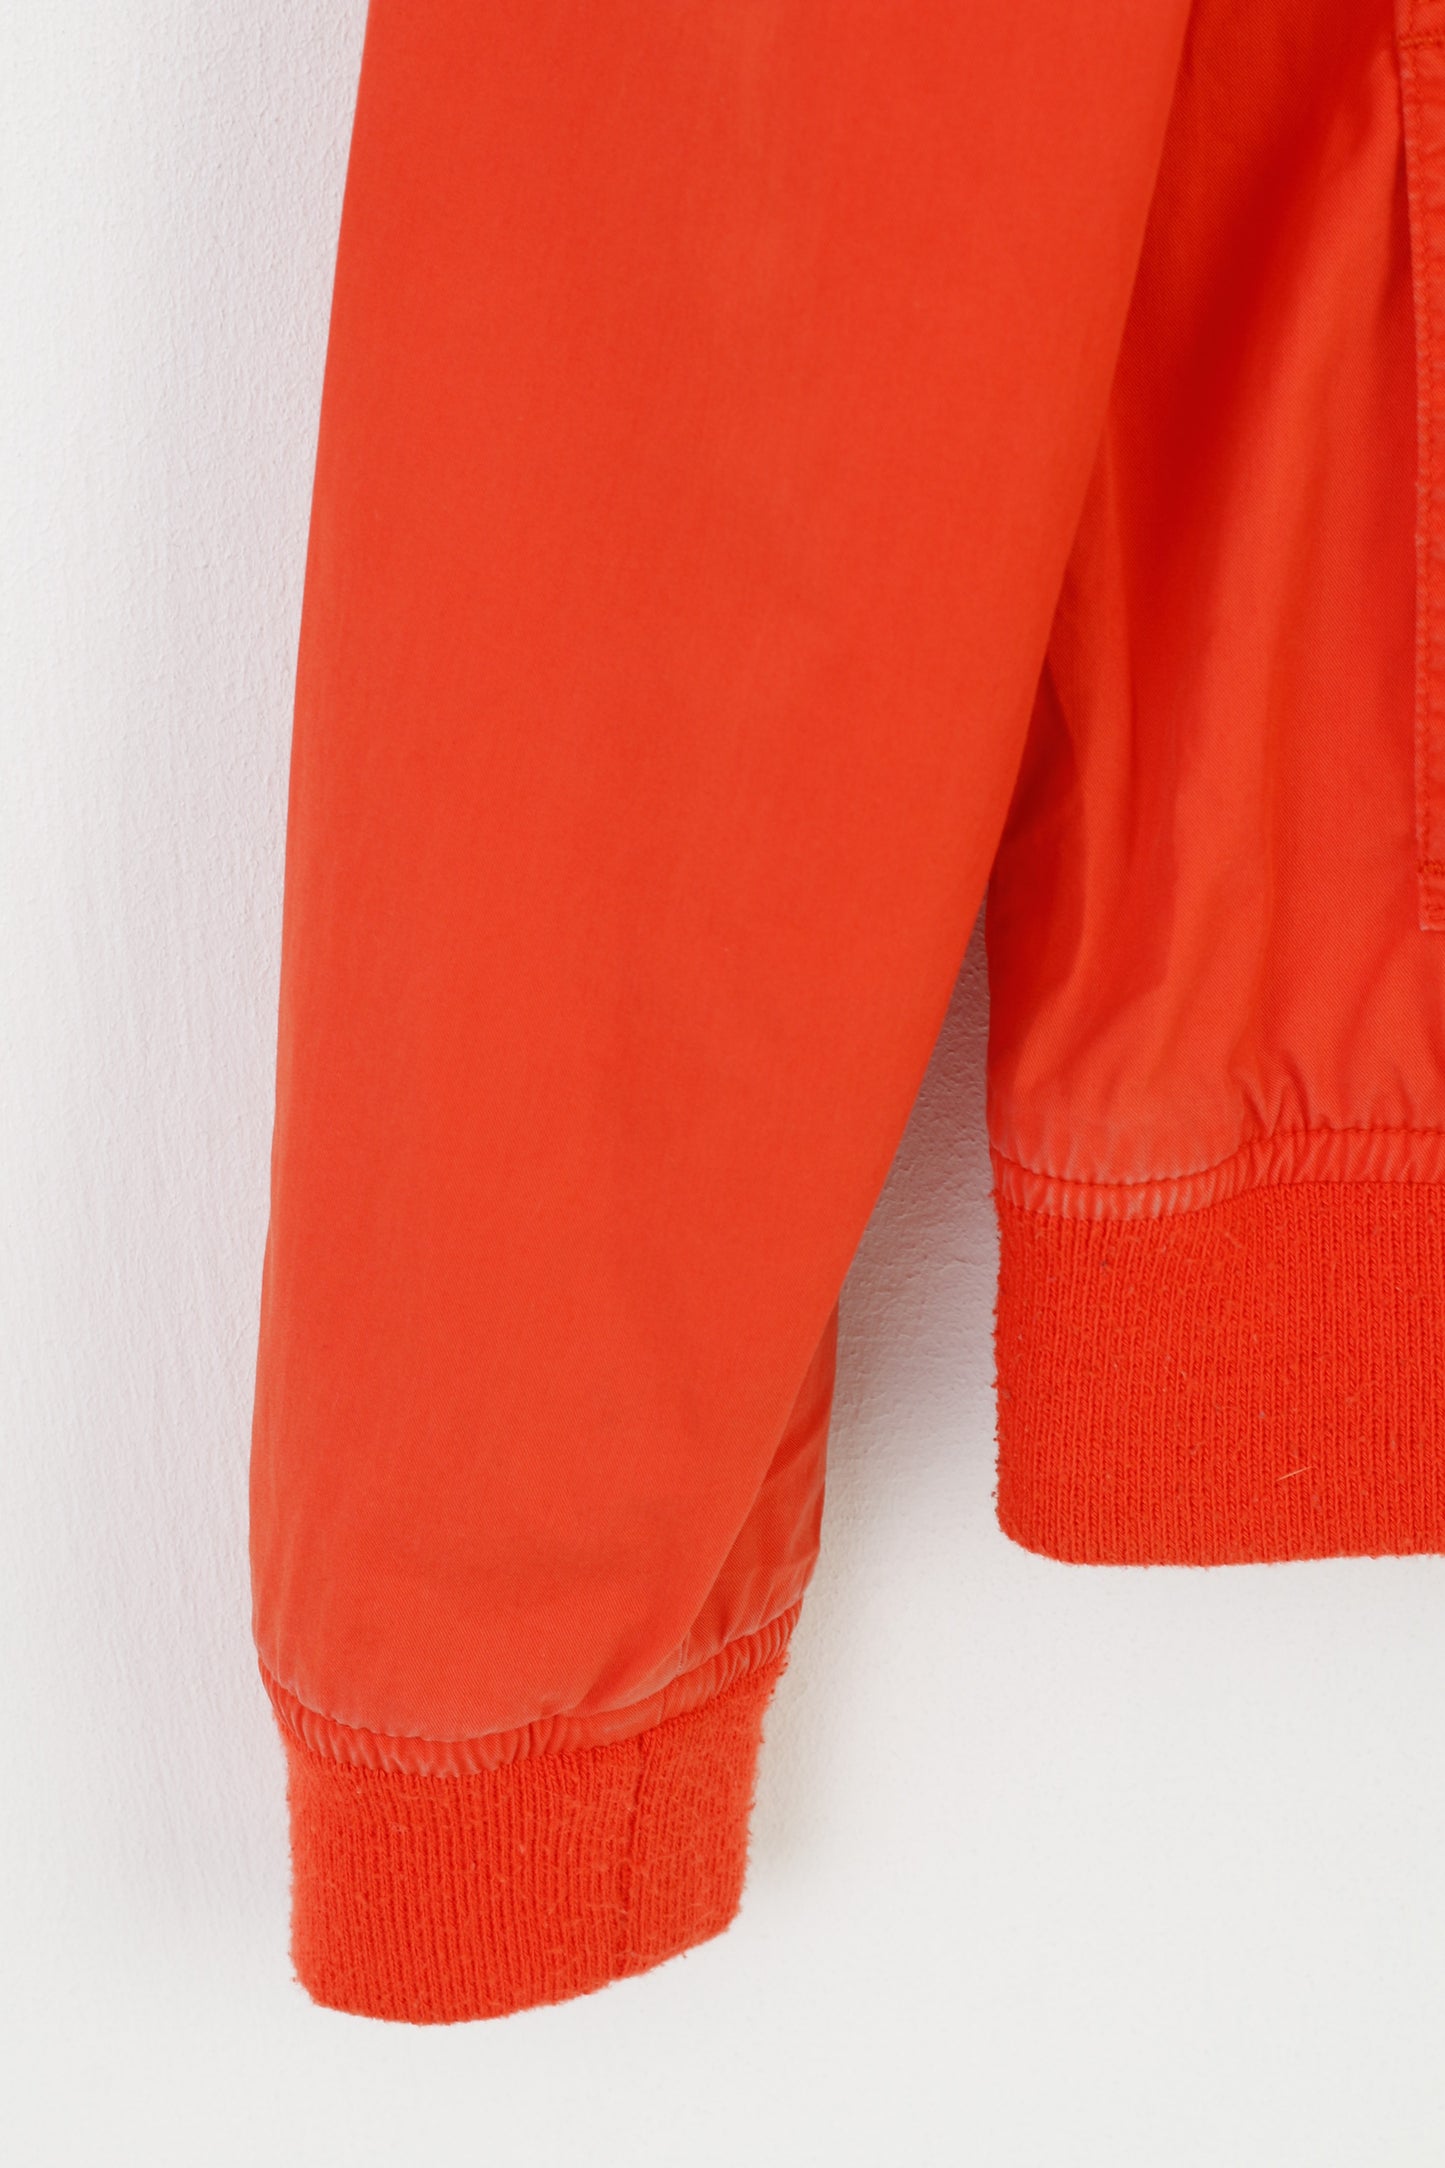 Troll Women M Jacket Orange Cotton Full Zipper Collar Vintage Top